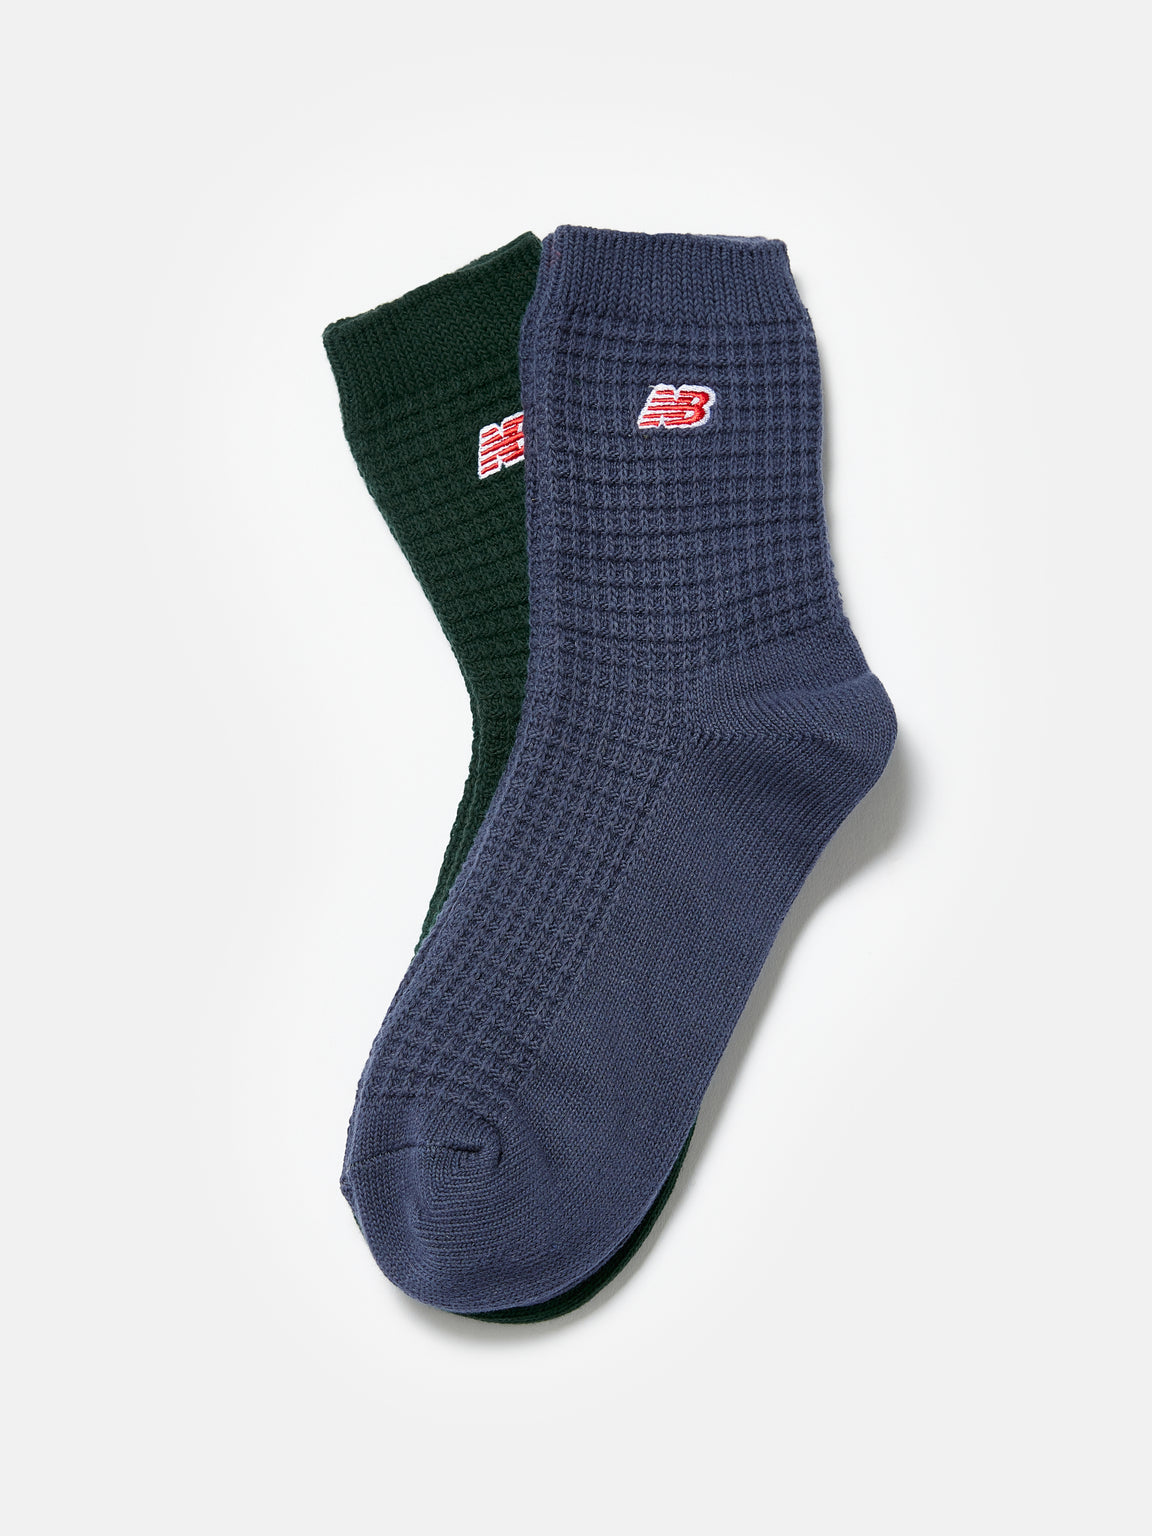 New Balance | Waffle Knit Ankle Socks For Men | Bellerose E-shop